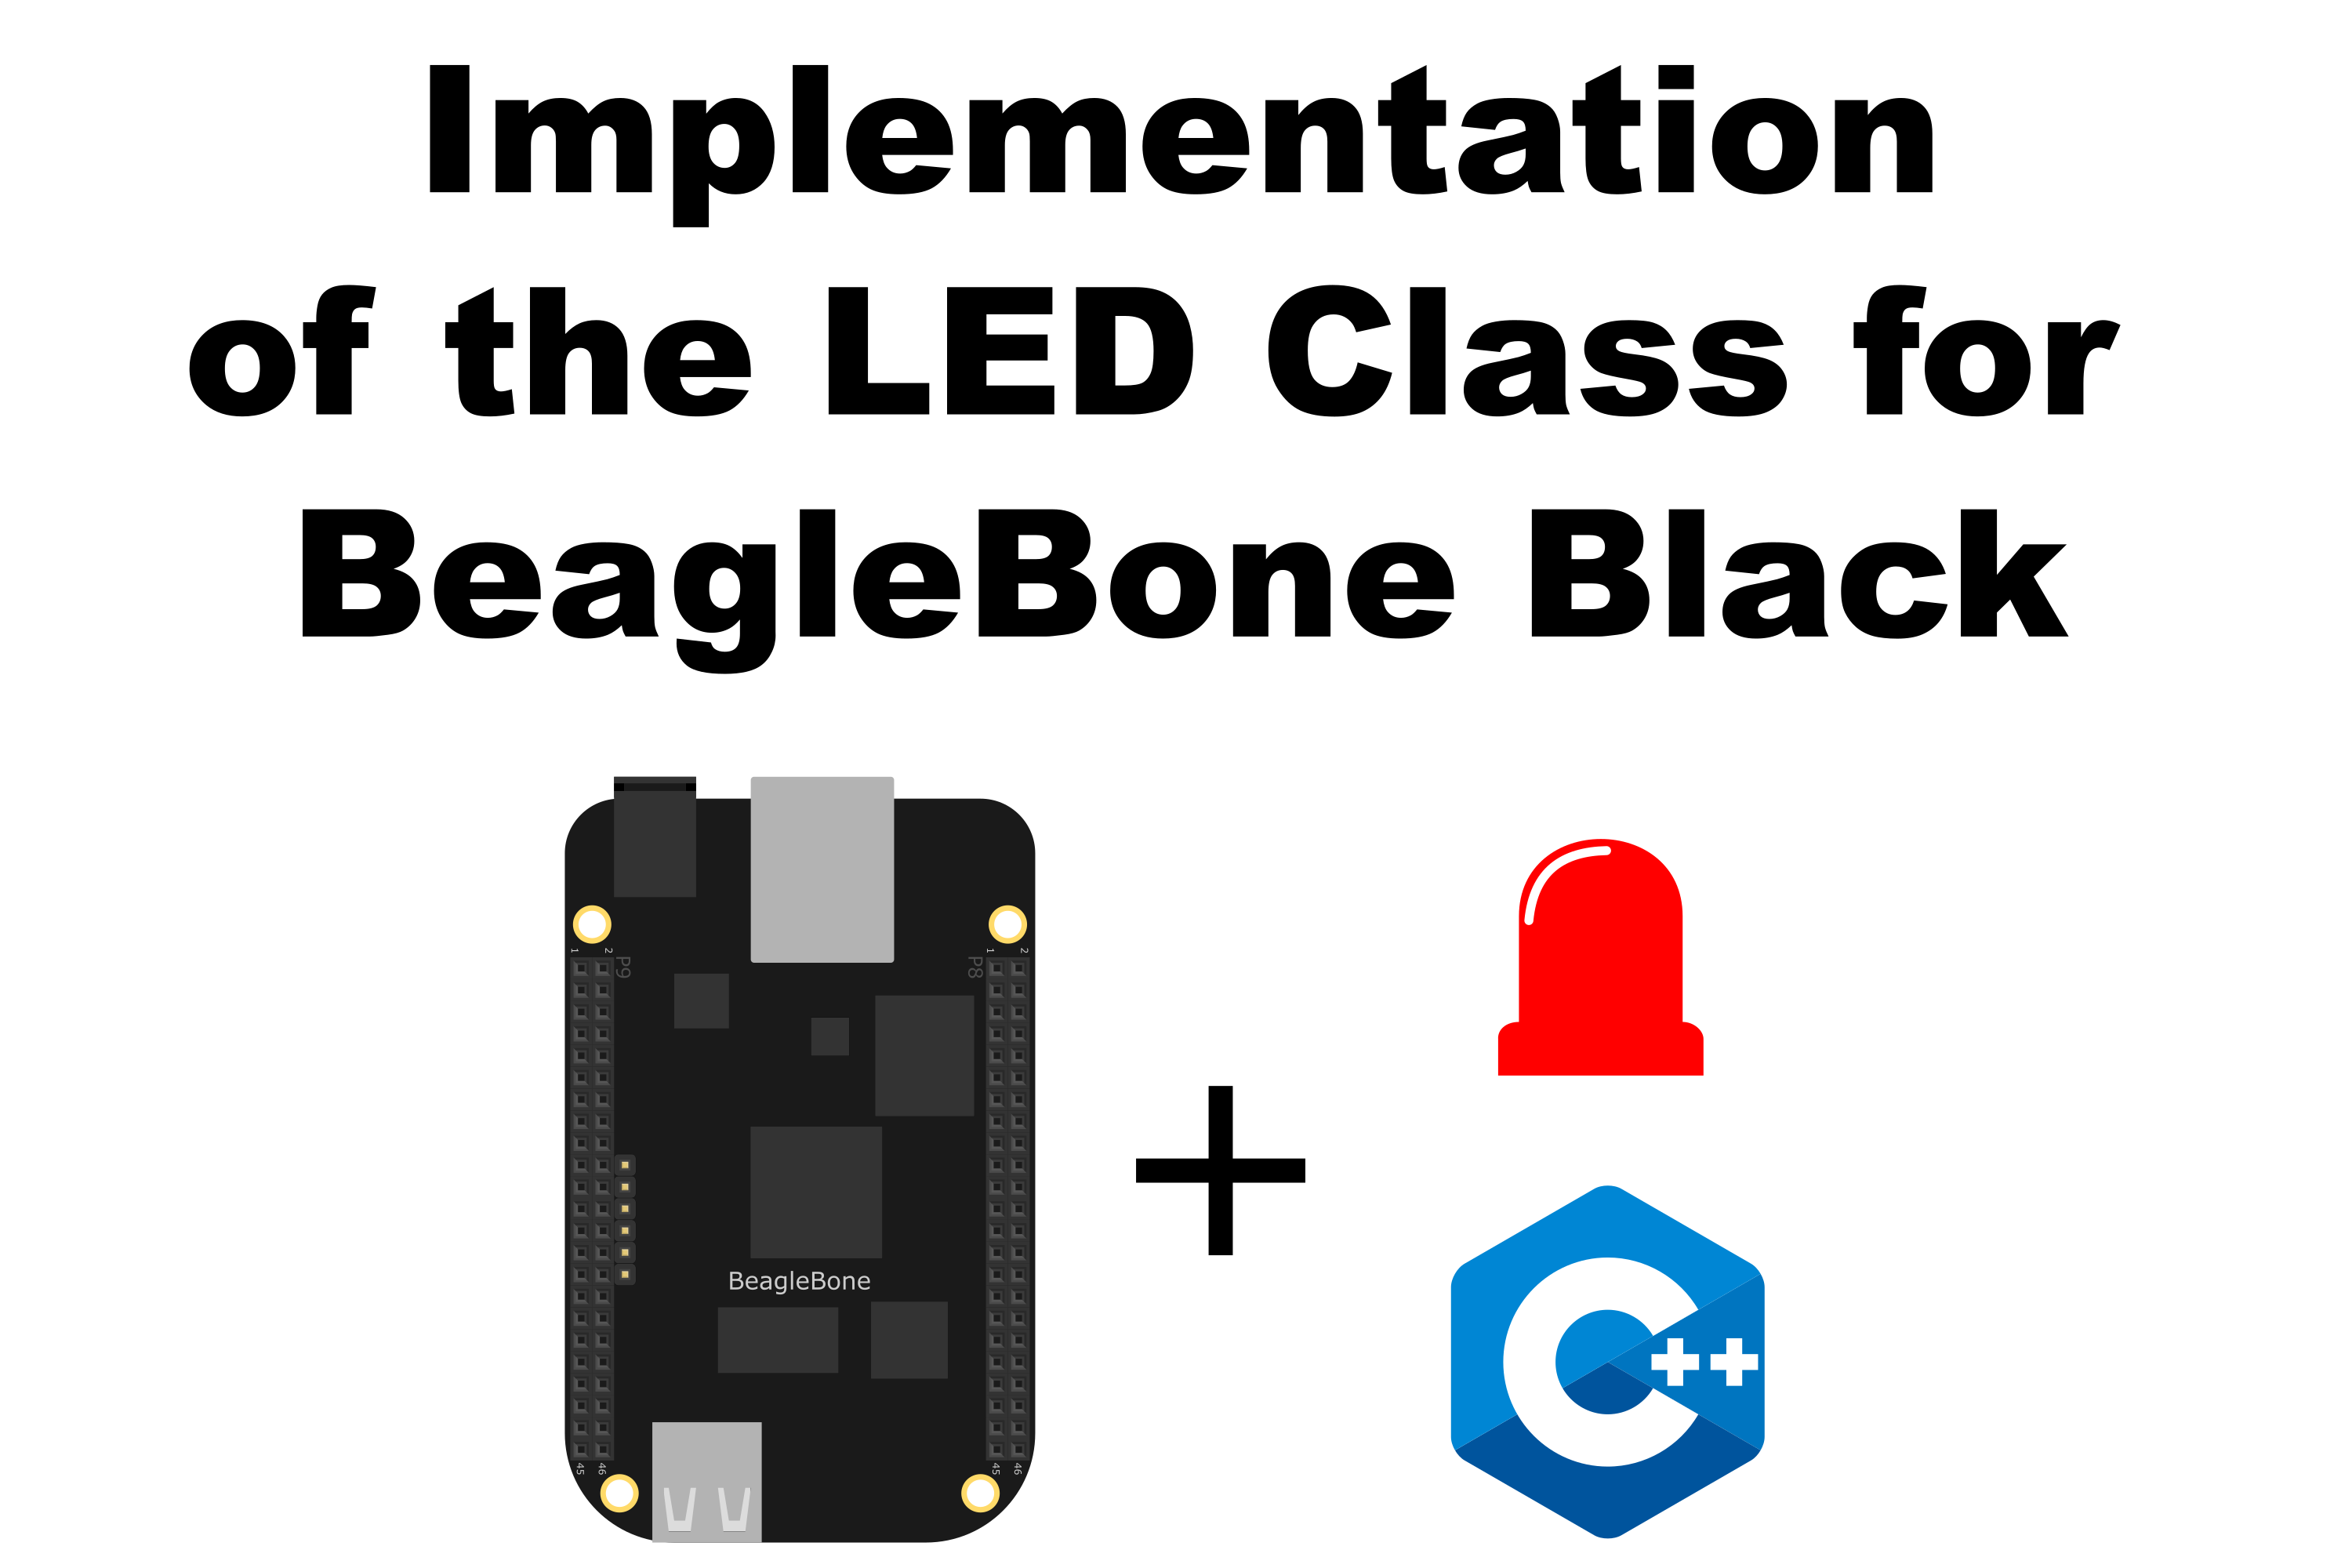 Implementation of the LED Class for BeagleBone Black